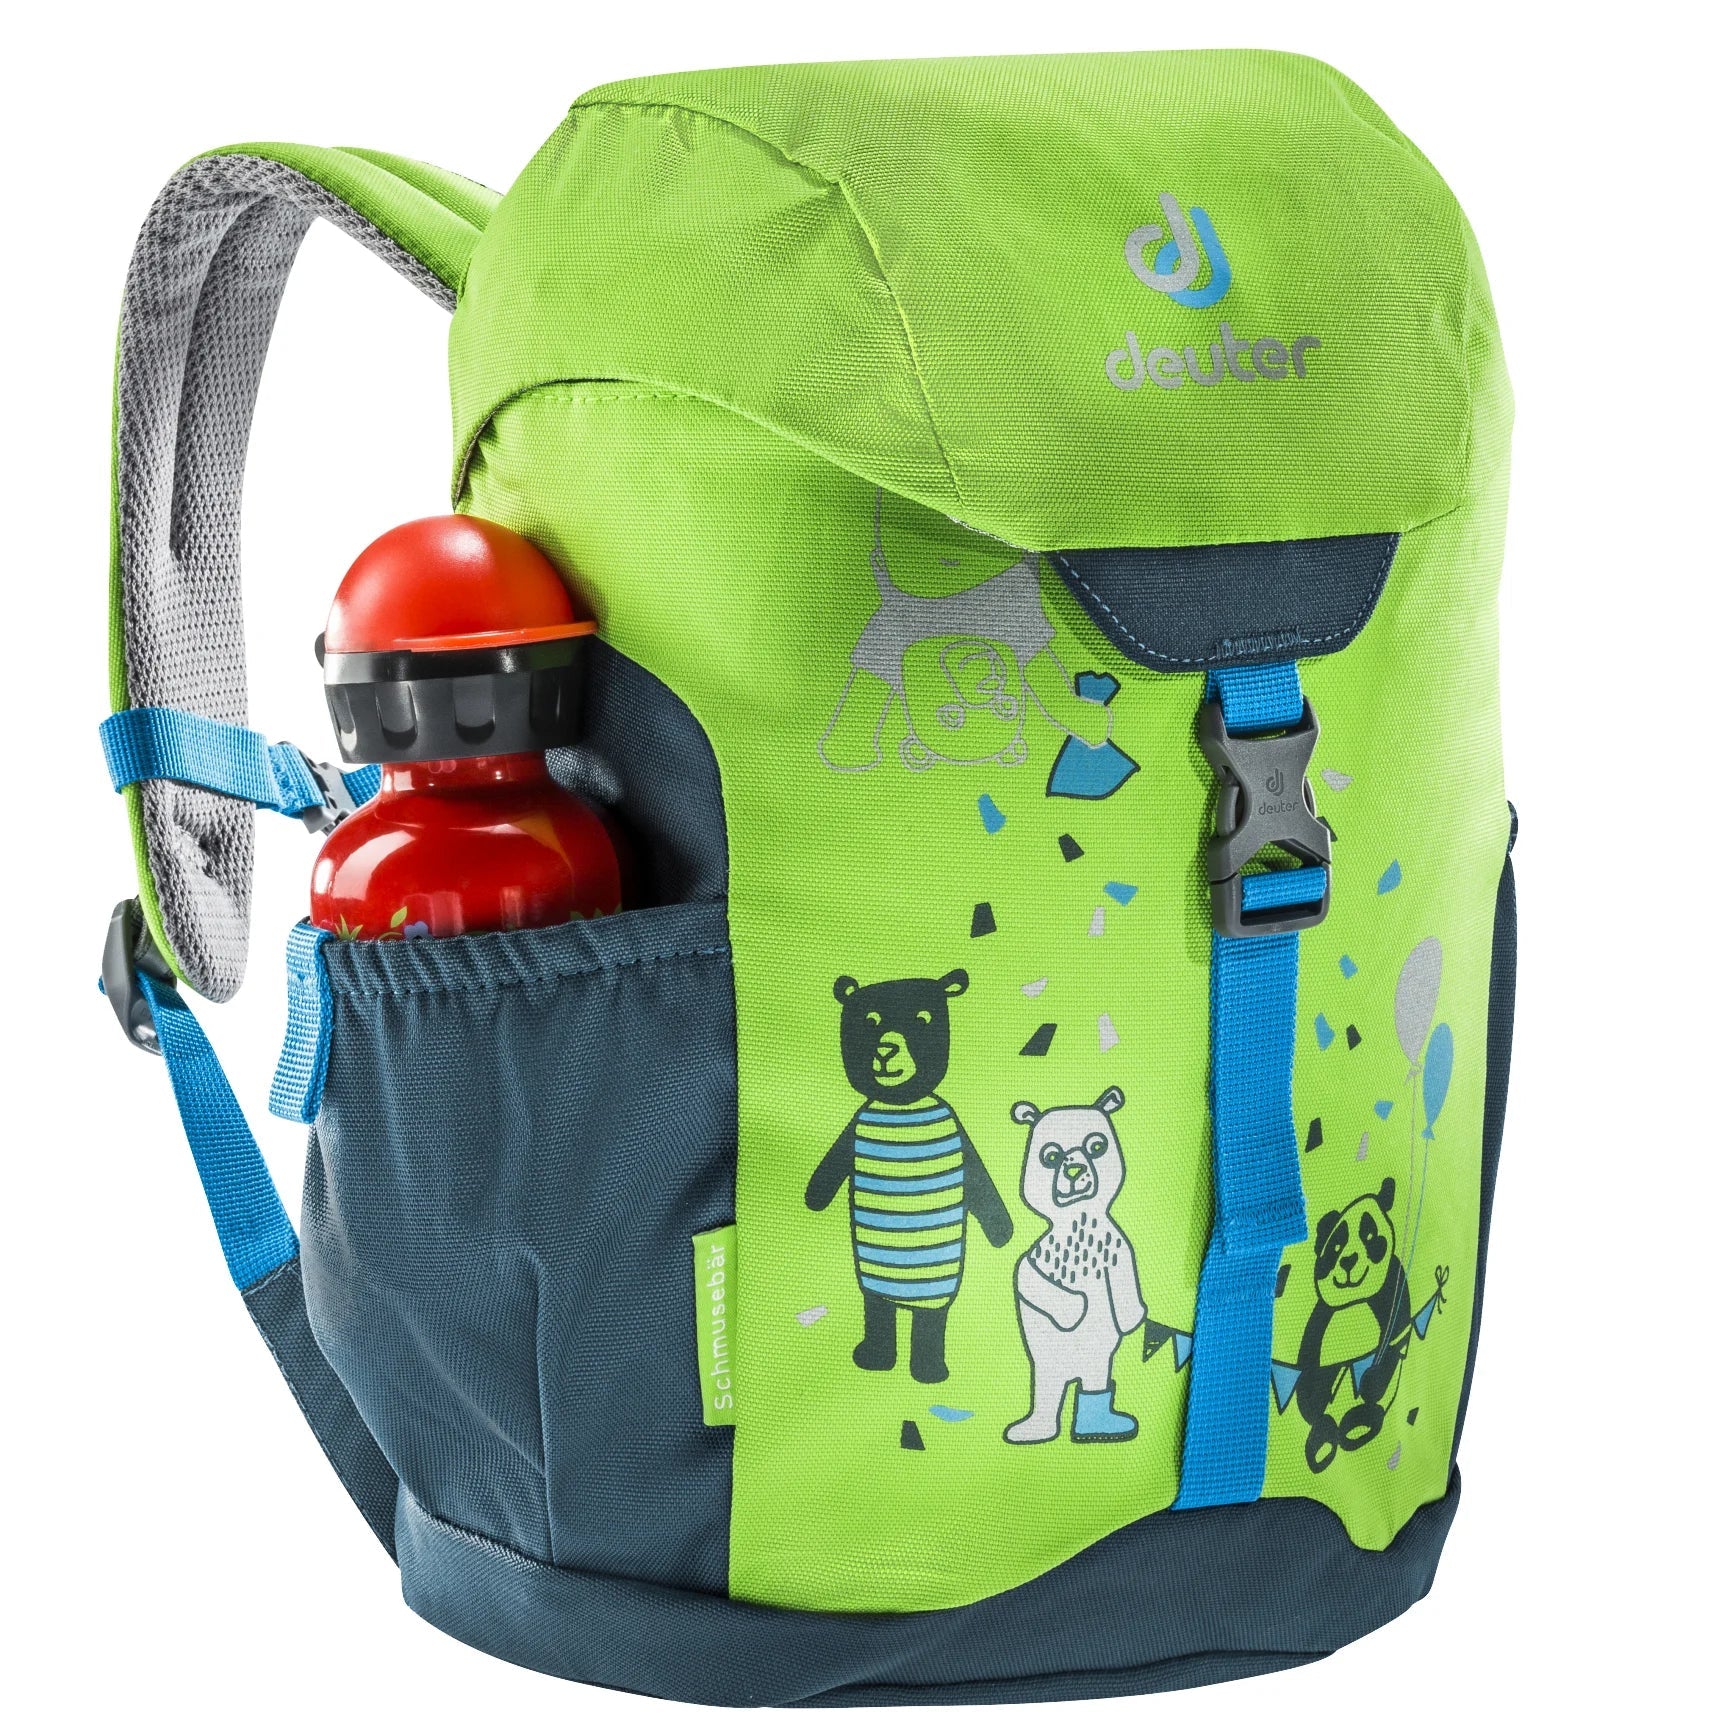 Deuter Daypack Schmusebär children's backpack 33 cm - Ruby-Hotpink